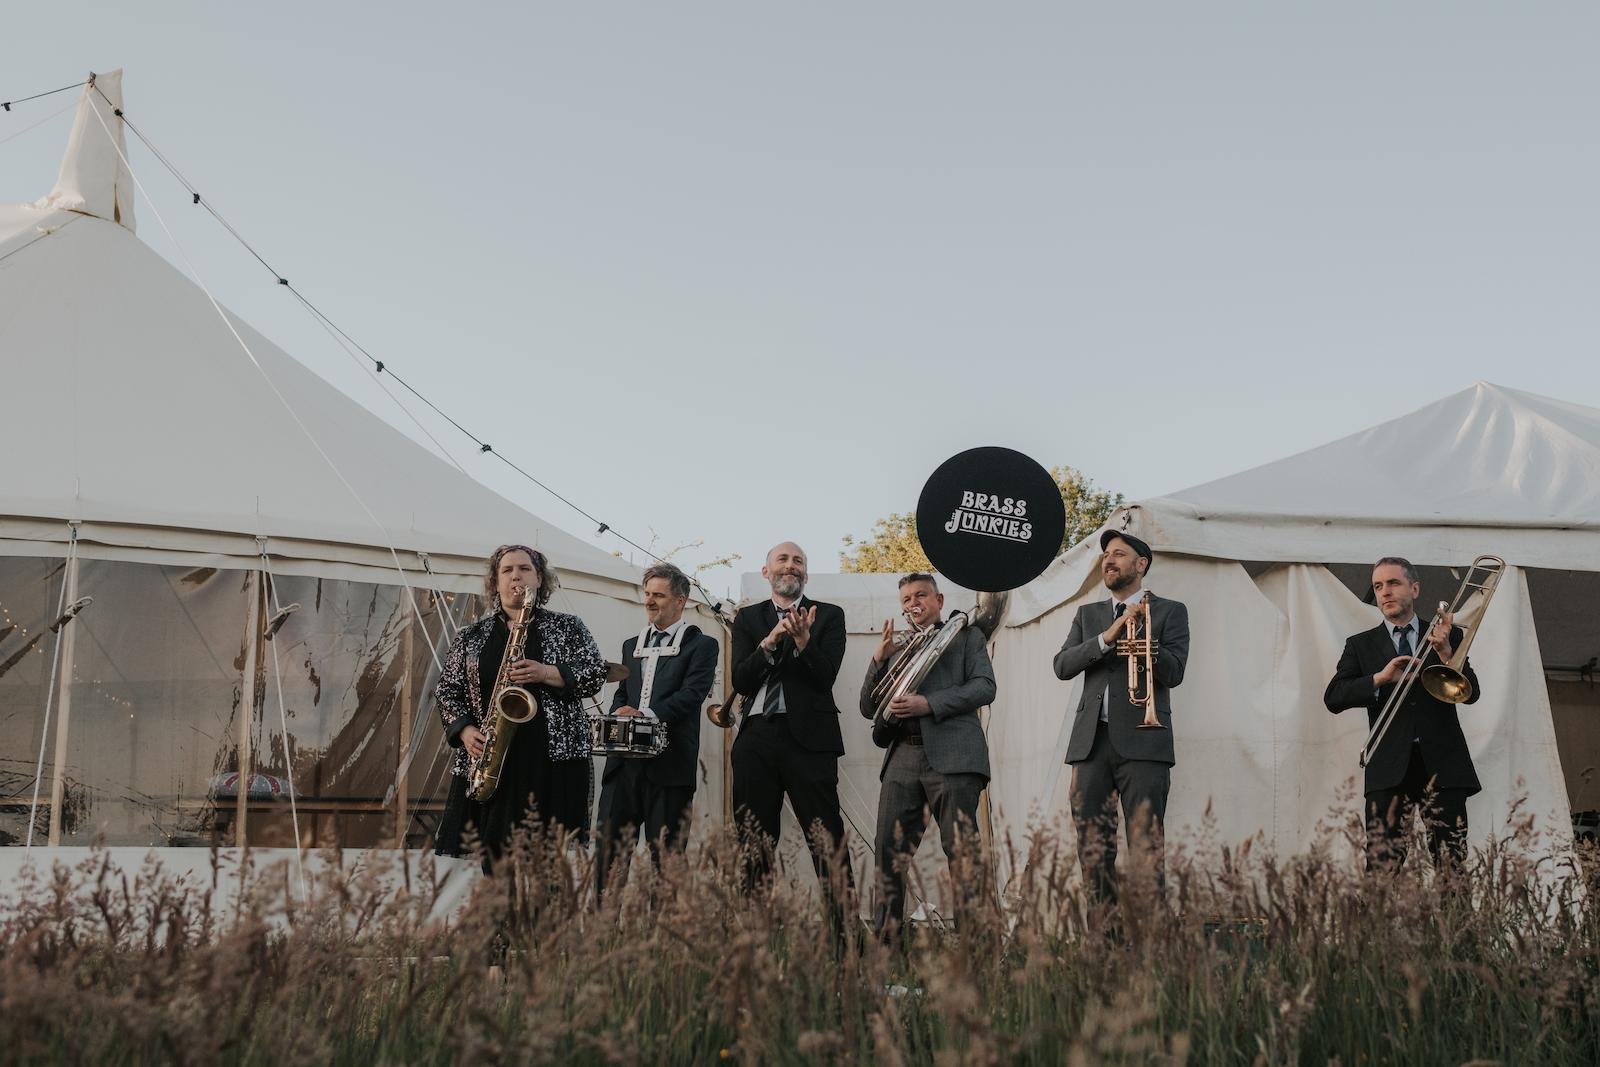 wedding-brass-band-brass-junkies-bristol-uk-outside-live-music-luarenknuckey.jpg